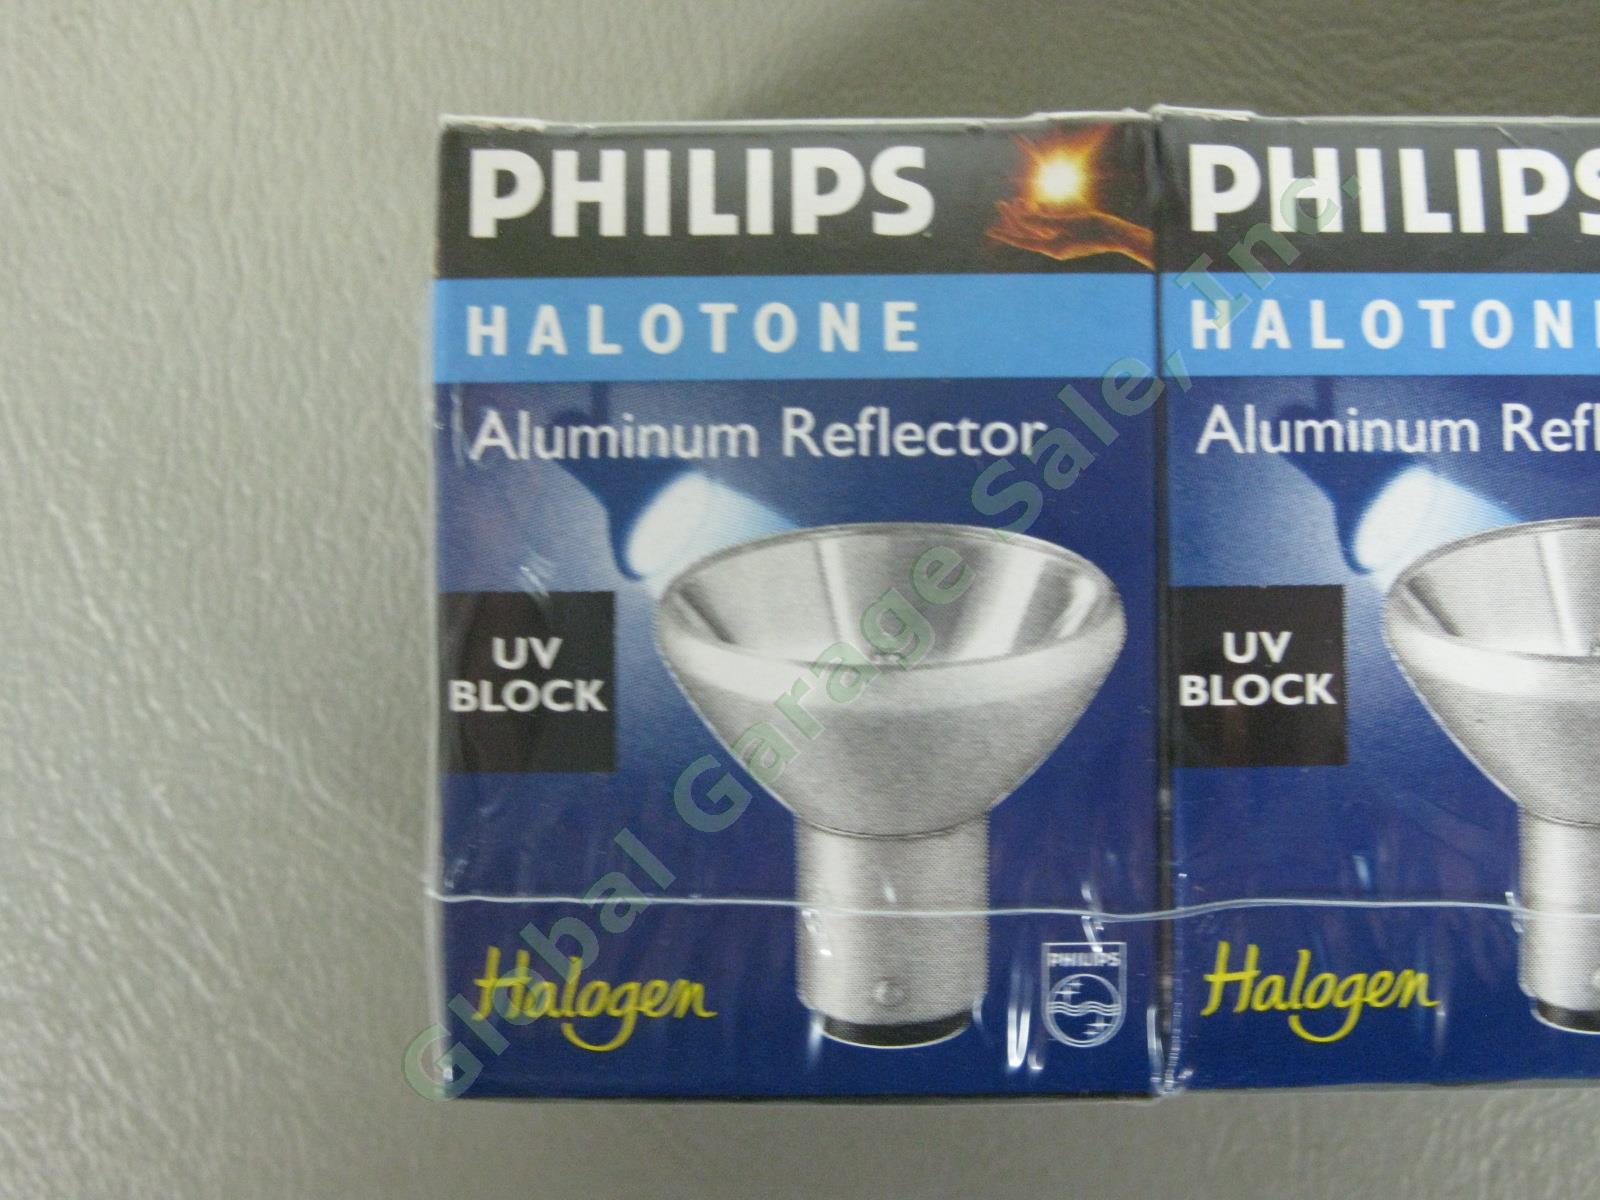 50 NEW Philips Halotone Light Bulb Lot 20w 12v UV Block 6434/FR Frosted 18° Set 2